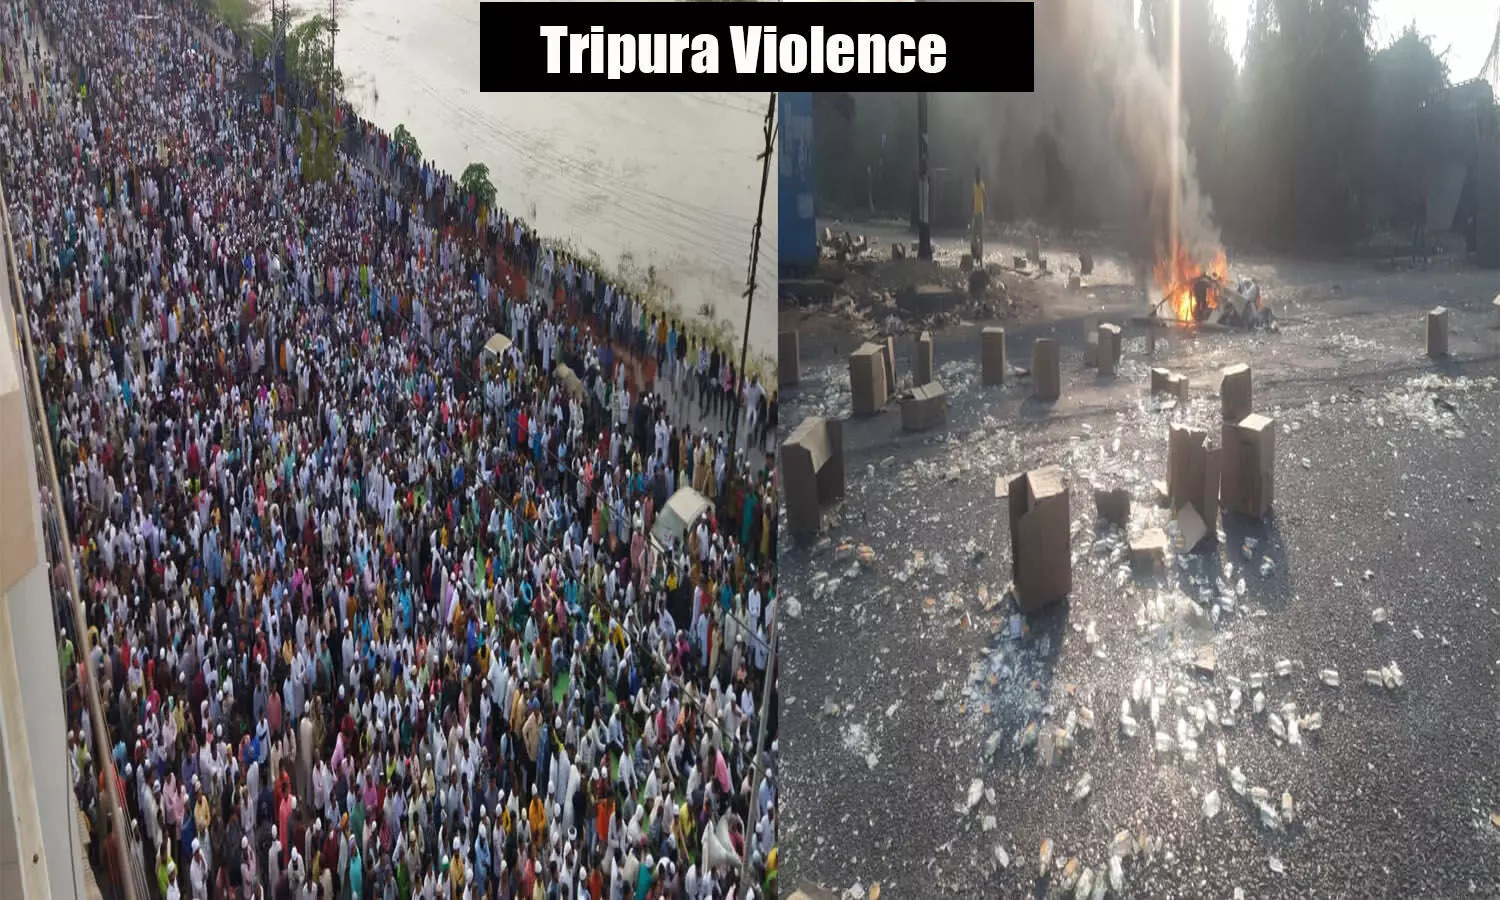 Tripura Violence